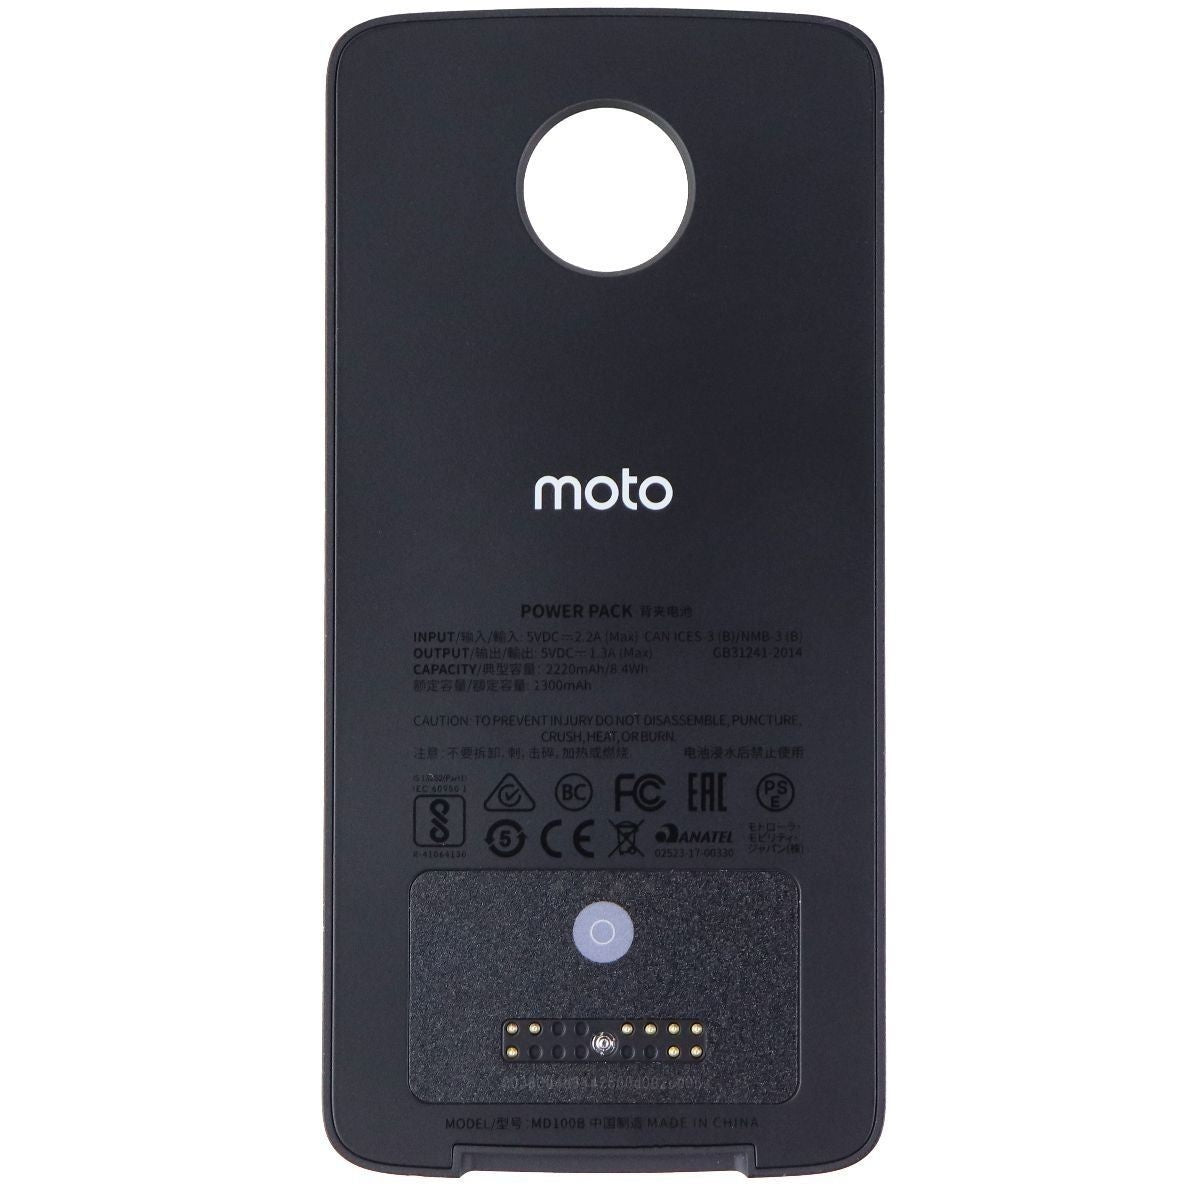 Motorola Moto Mods 2,220mAh Power Pack for Moto Z Phones - Black (MD100B) Cell Phone - Chargers & Cradles Motorola    - Simple Cell Bulk Wholesale Pricing - USA Seller